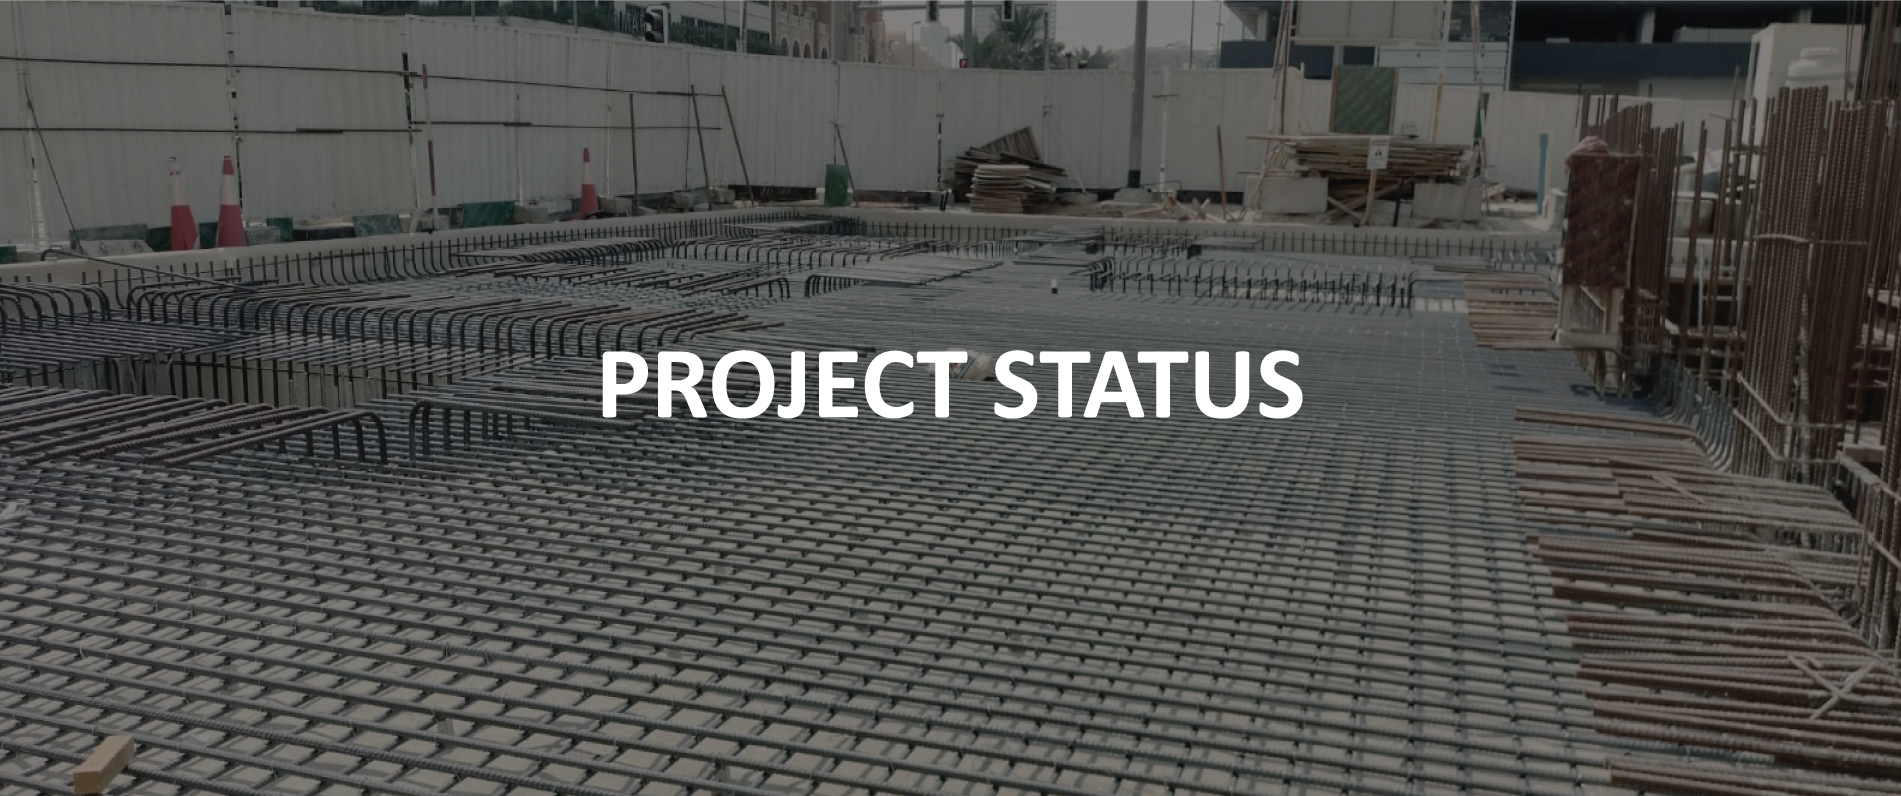 Project-Status-3